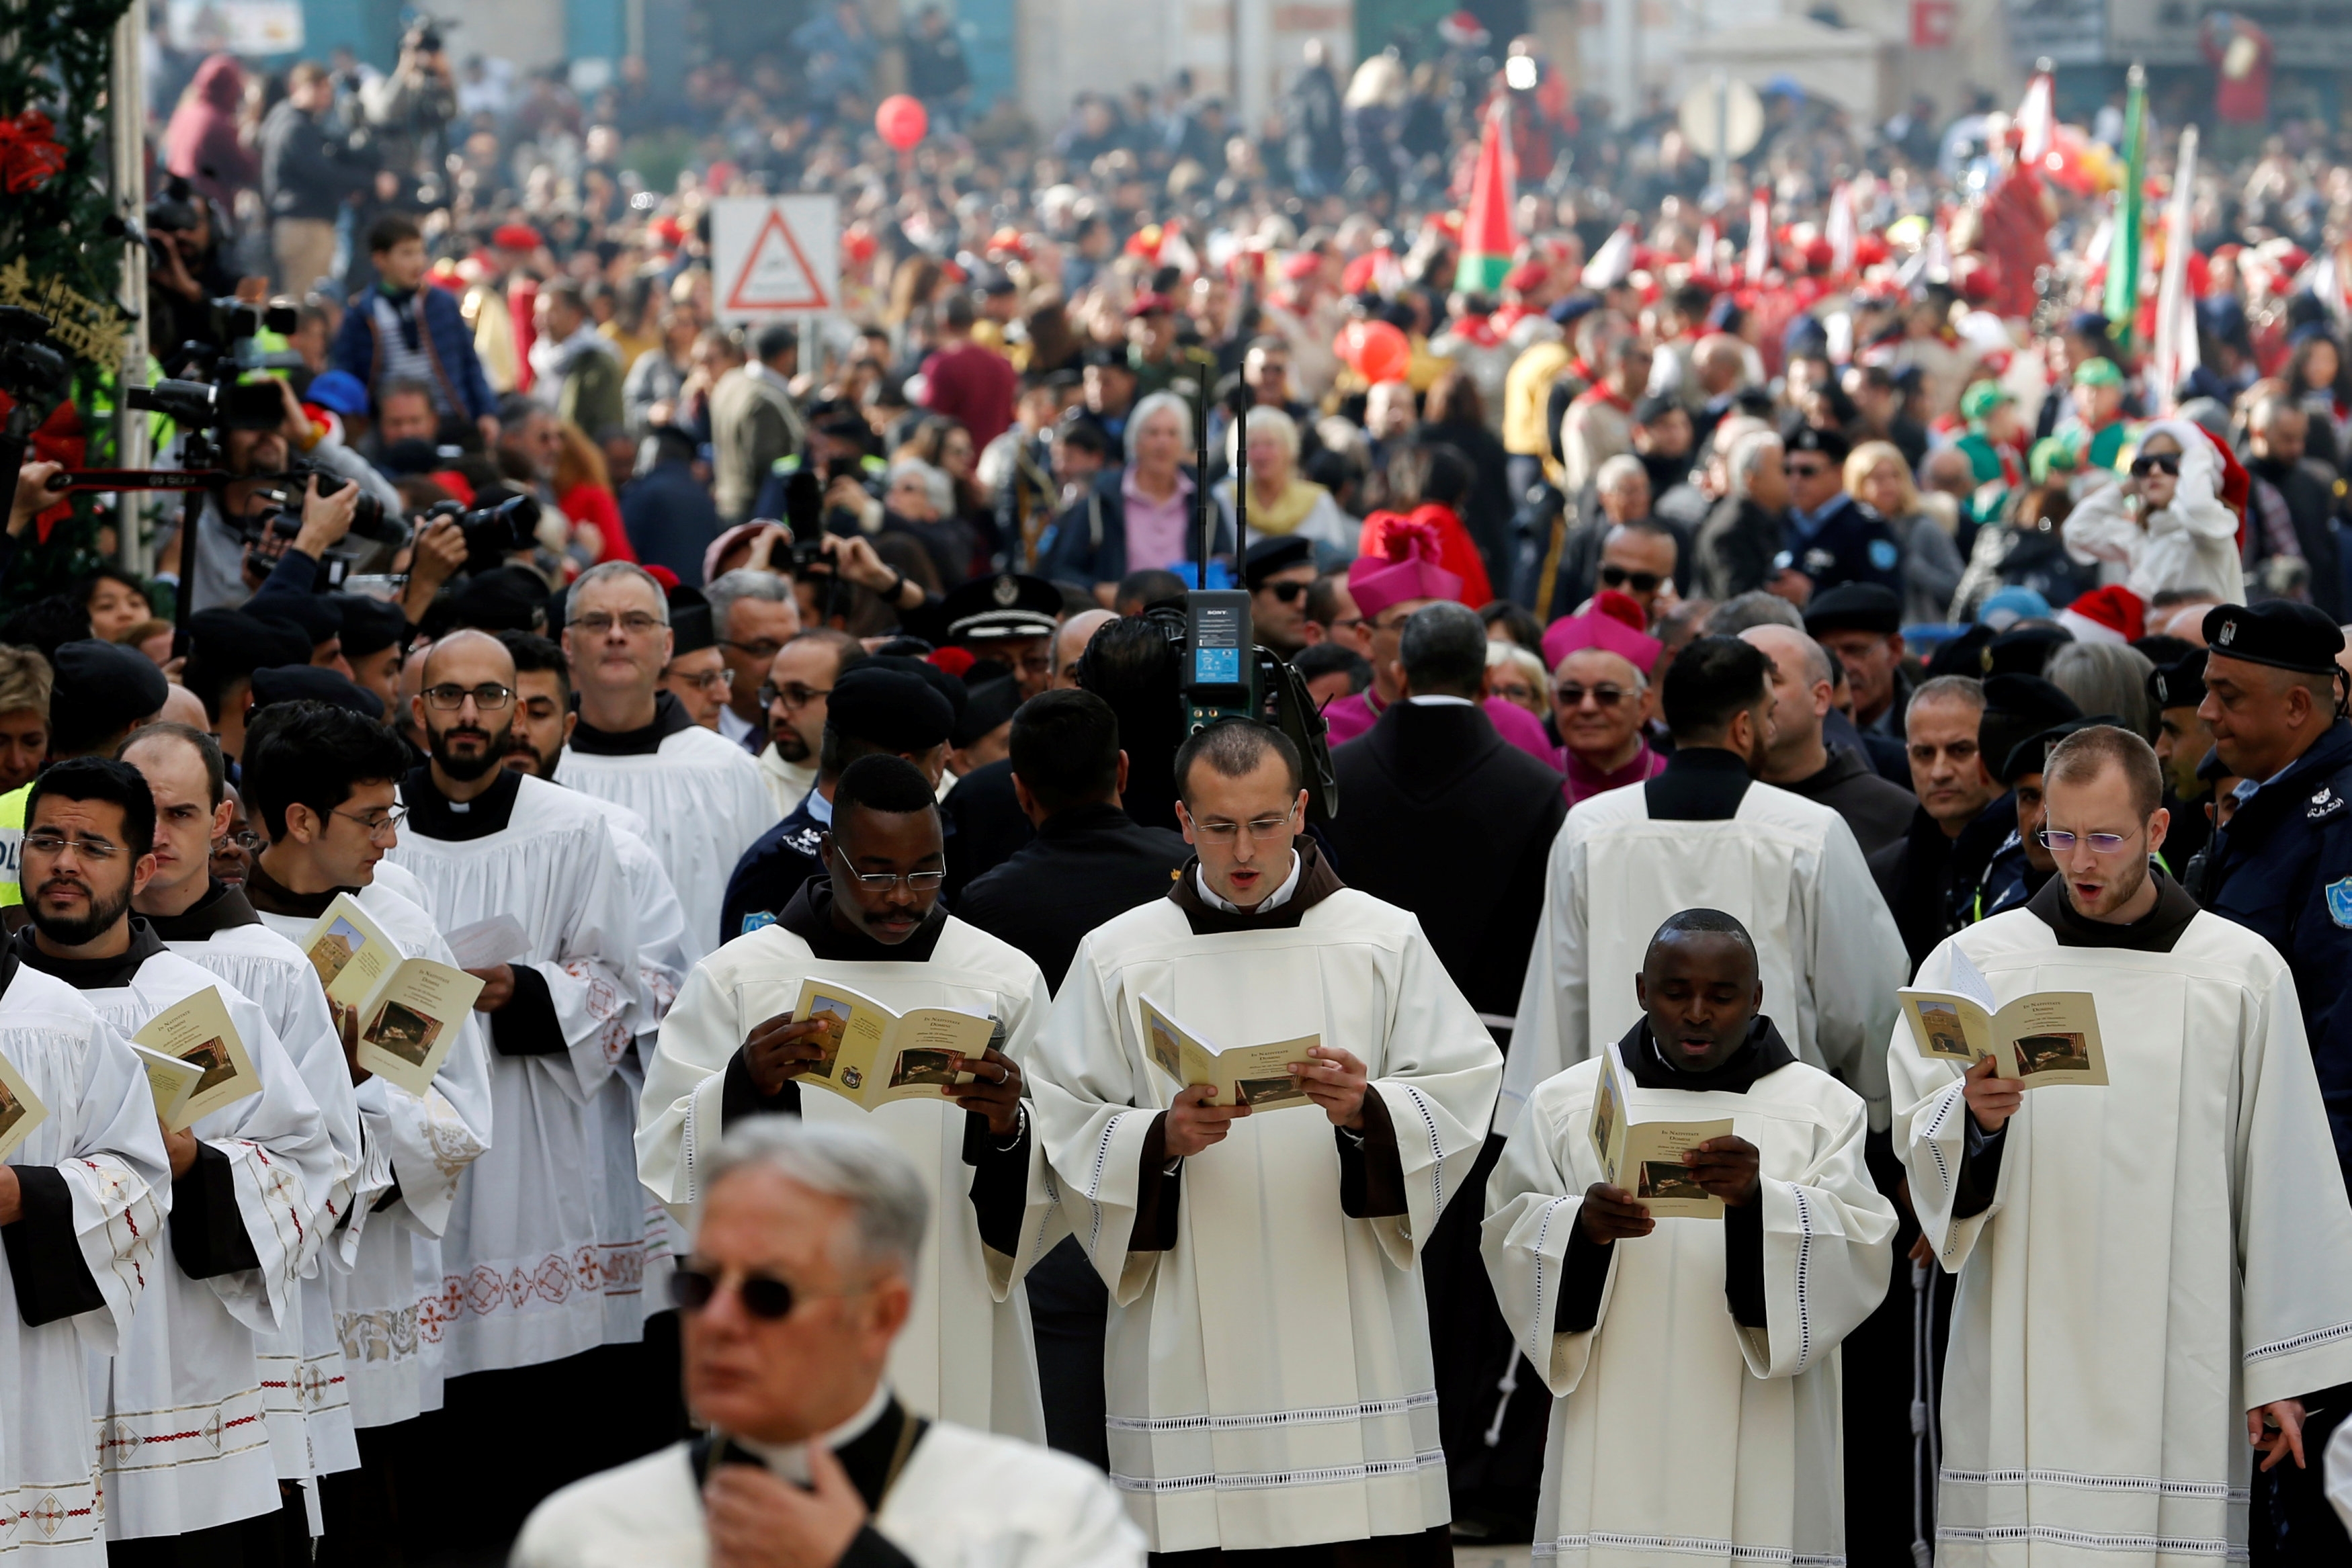 Biblical Bethlehem draws largest Christmas crowd in years